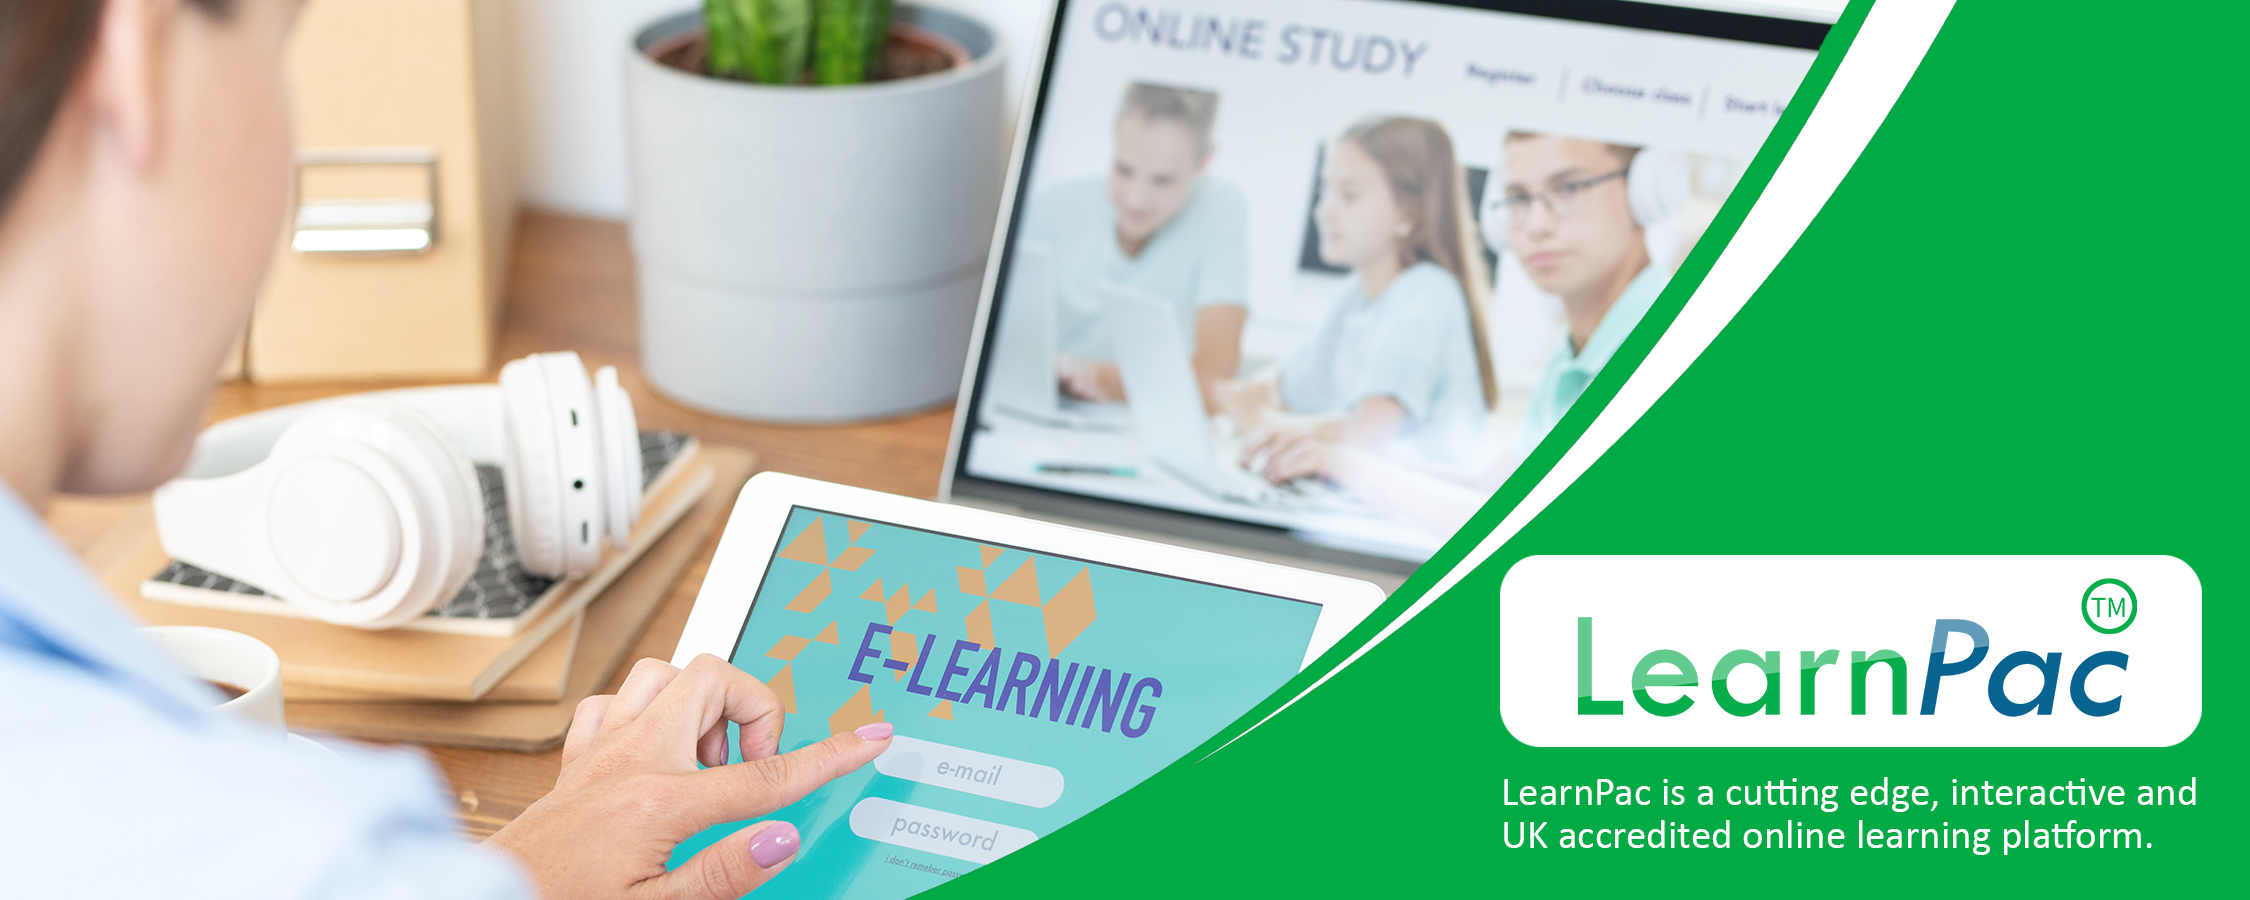 Practice Digital Marketing - Online Learning Courses - E-Learning Courses - LearnPac Systems UK --